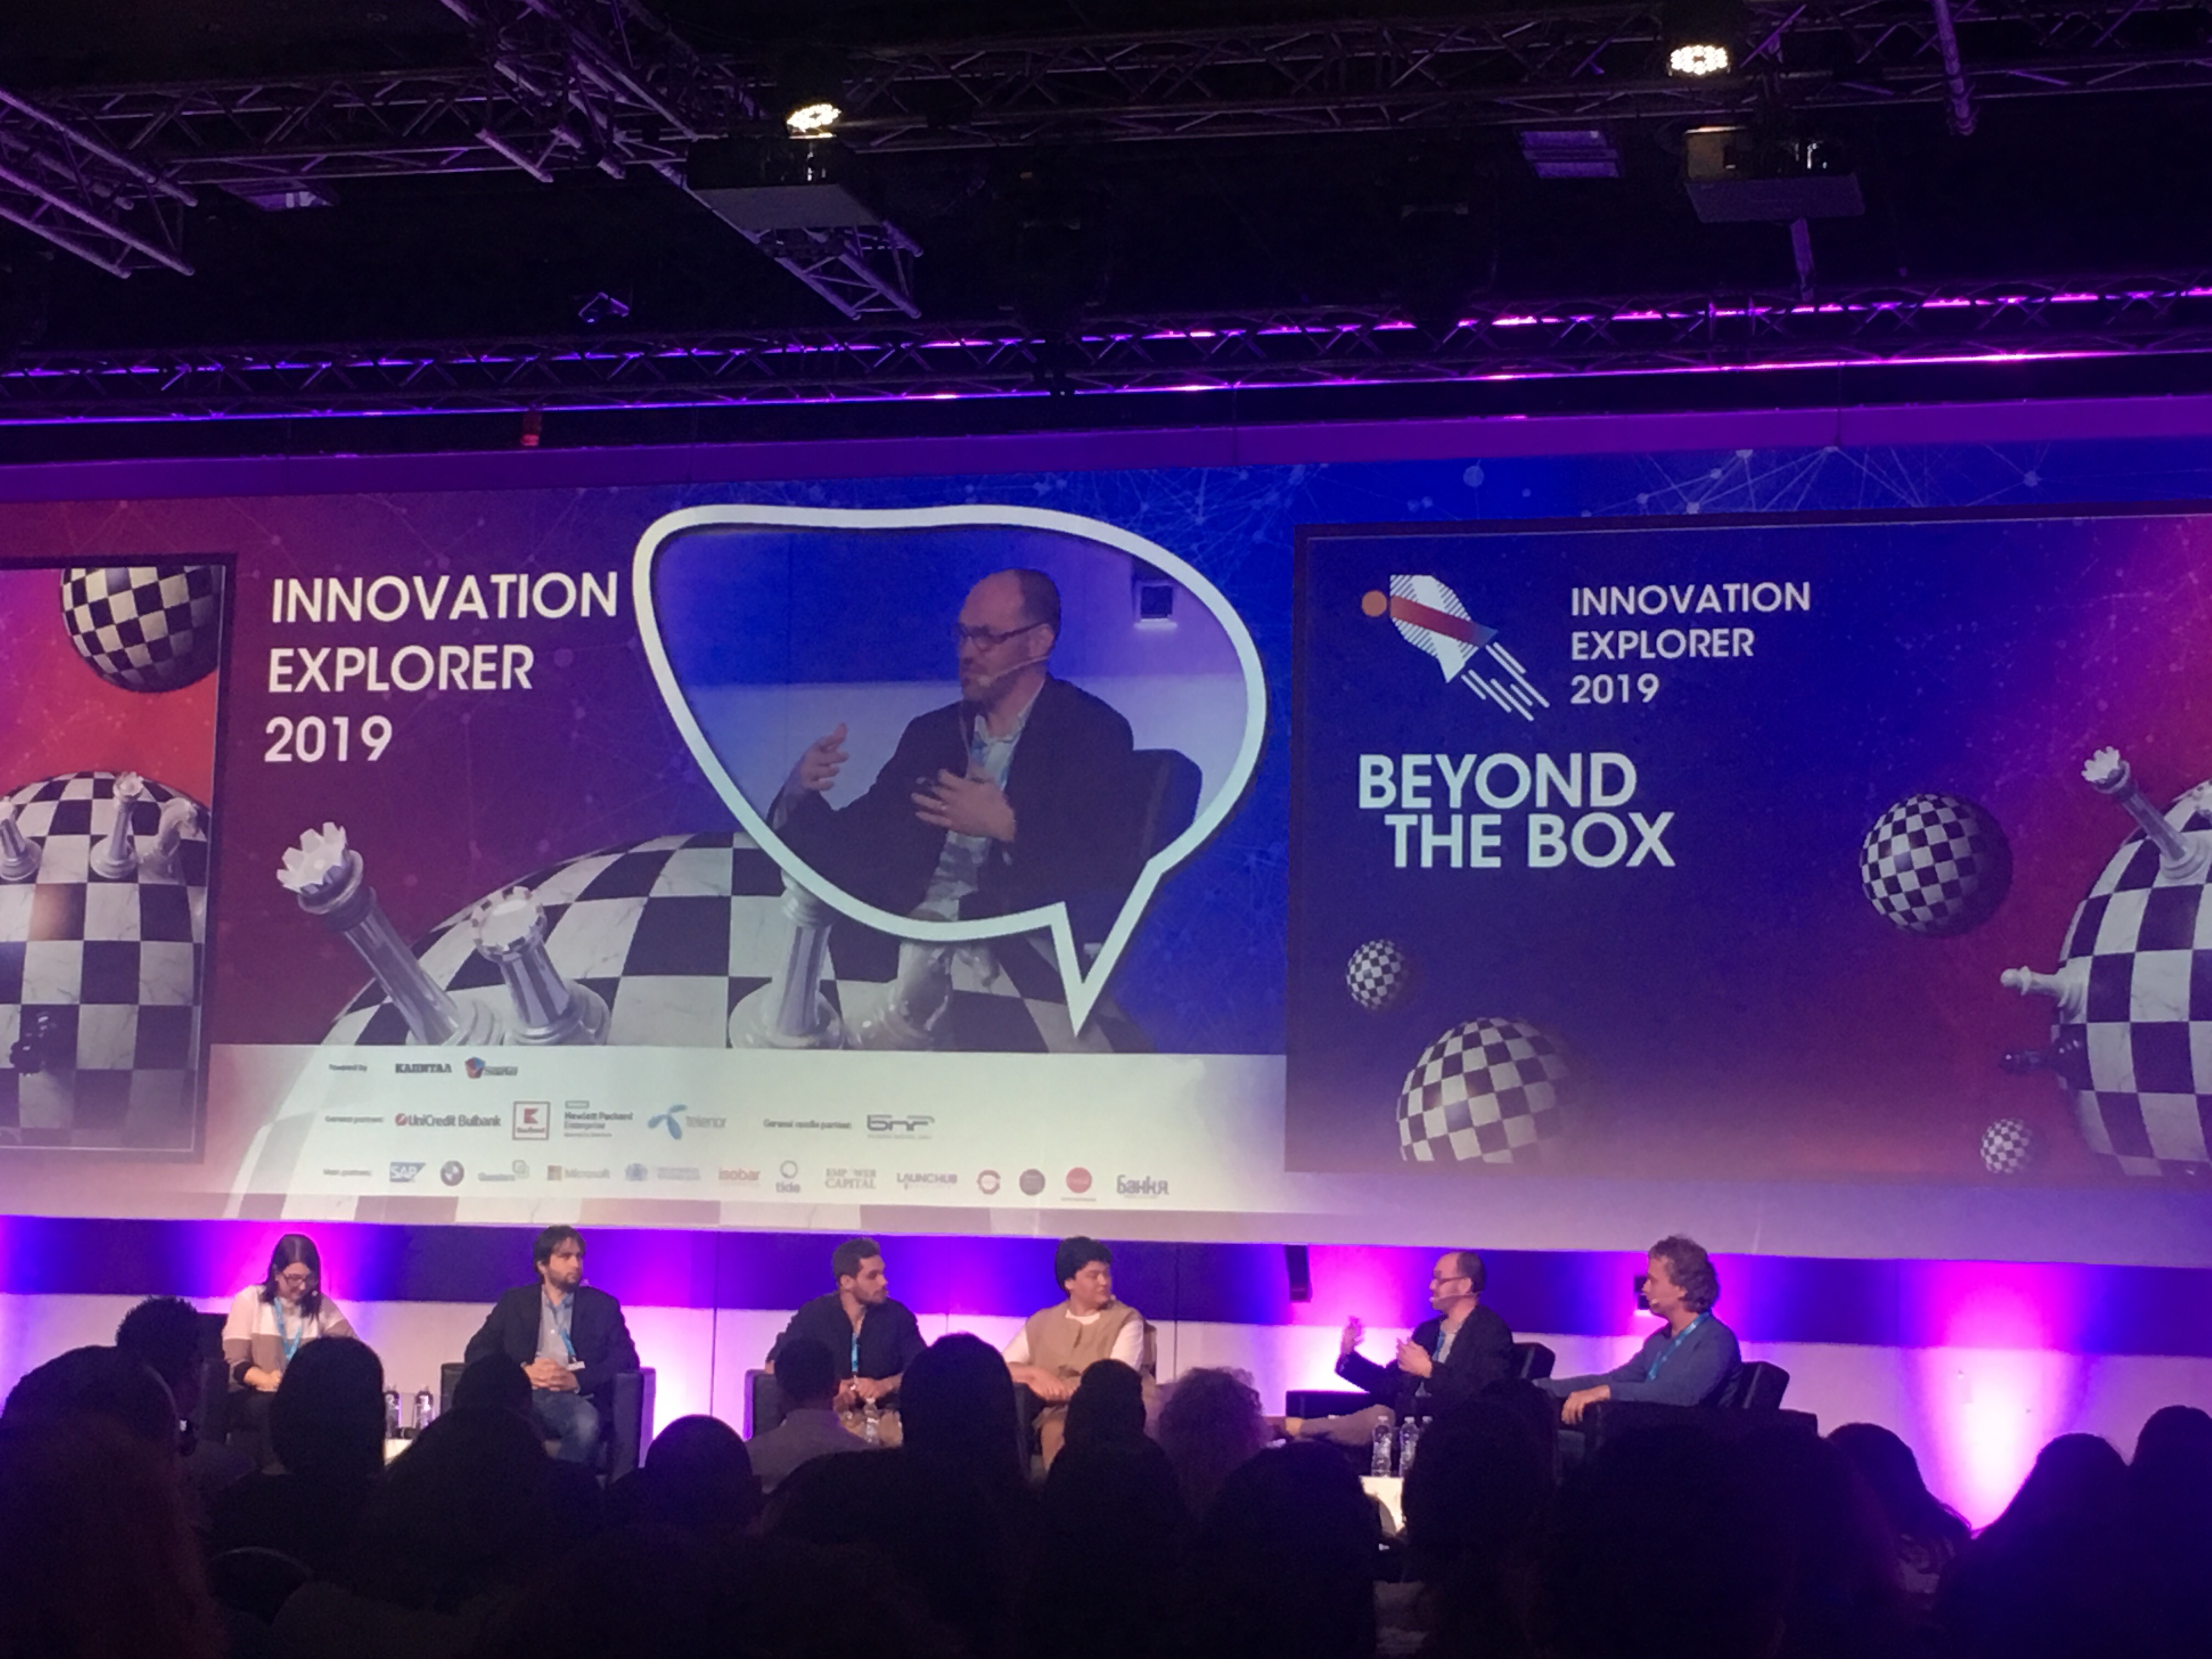 Innovation explorer – Bulgaria, February 2019